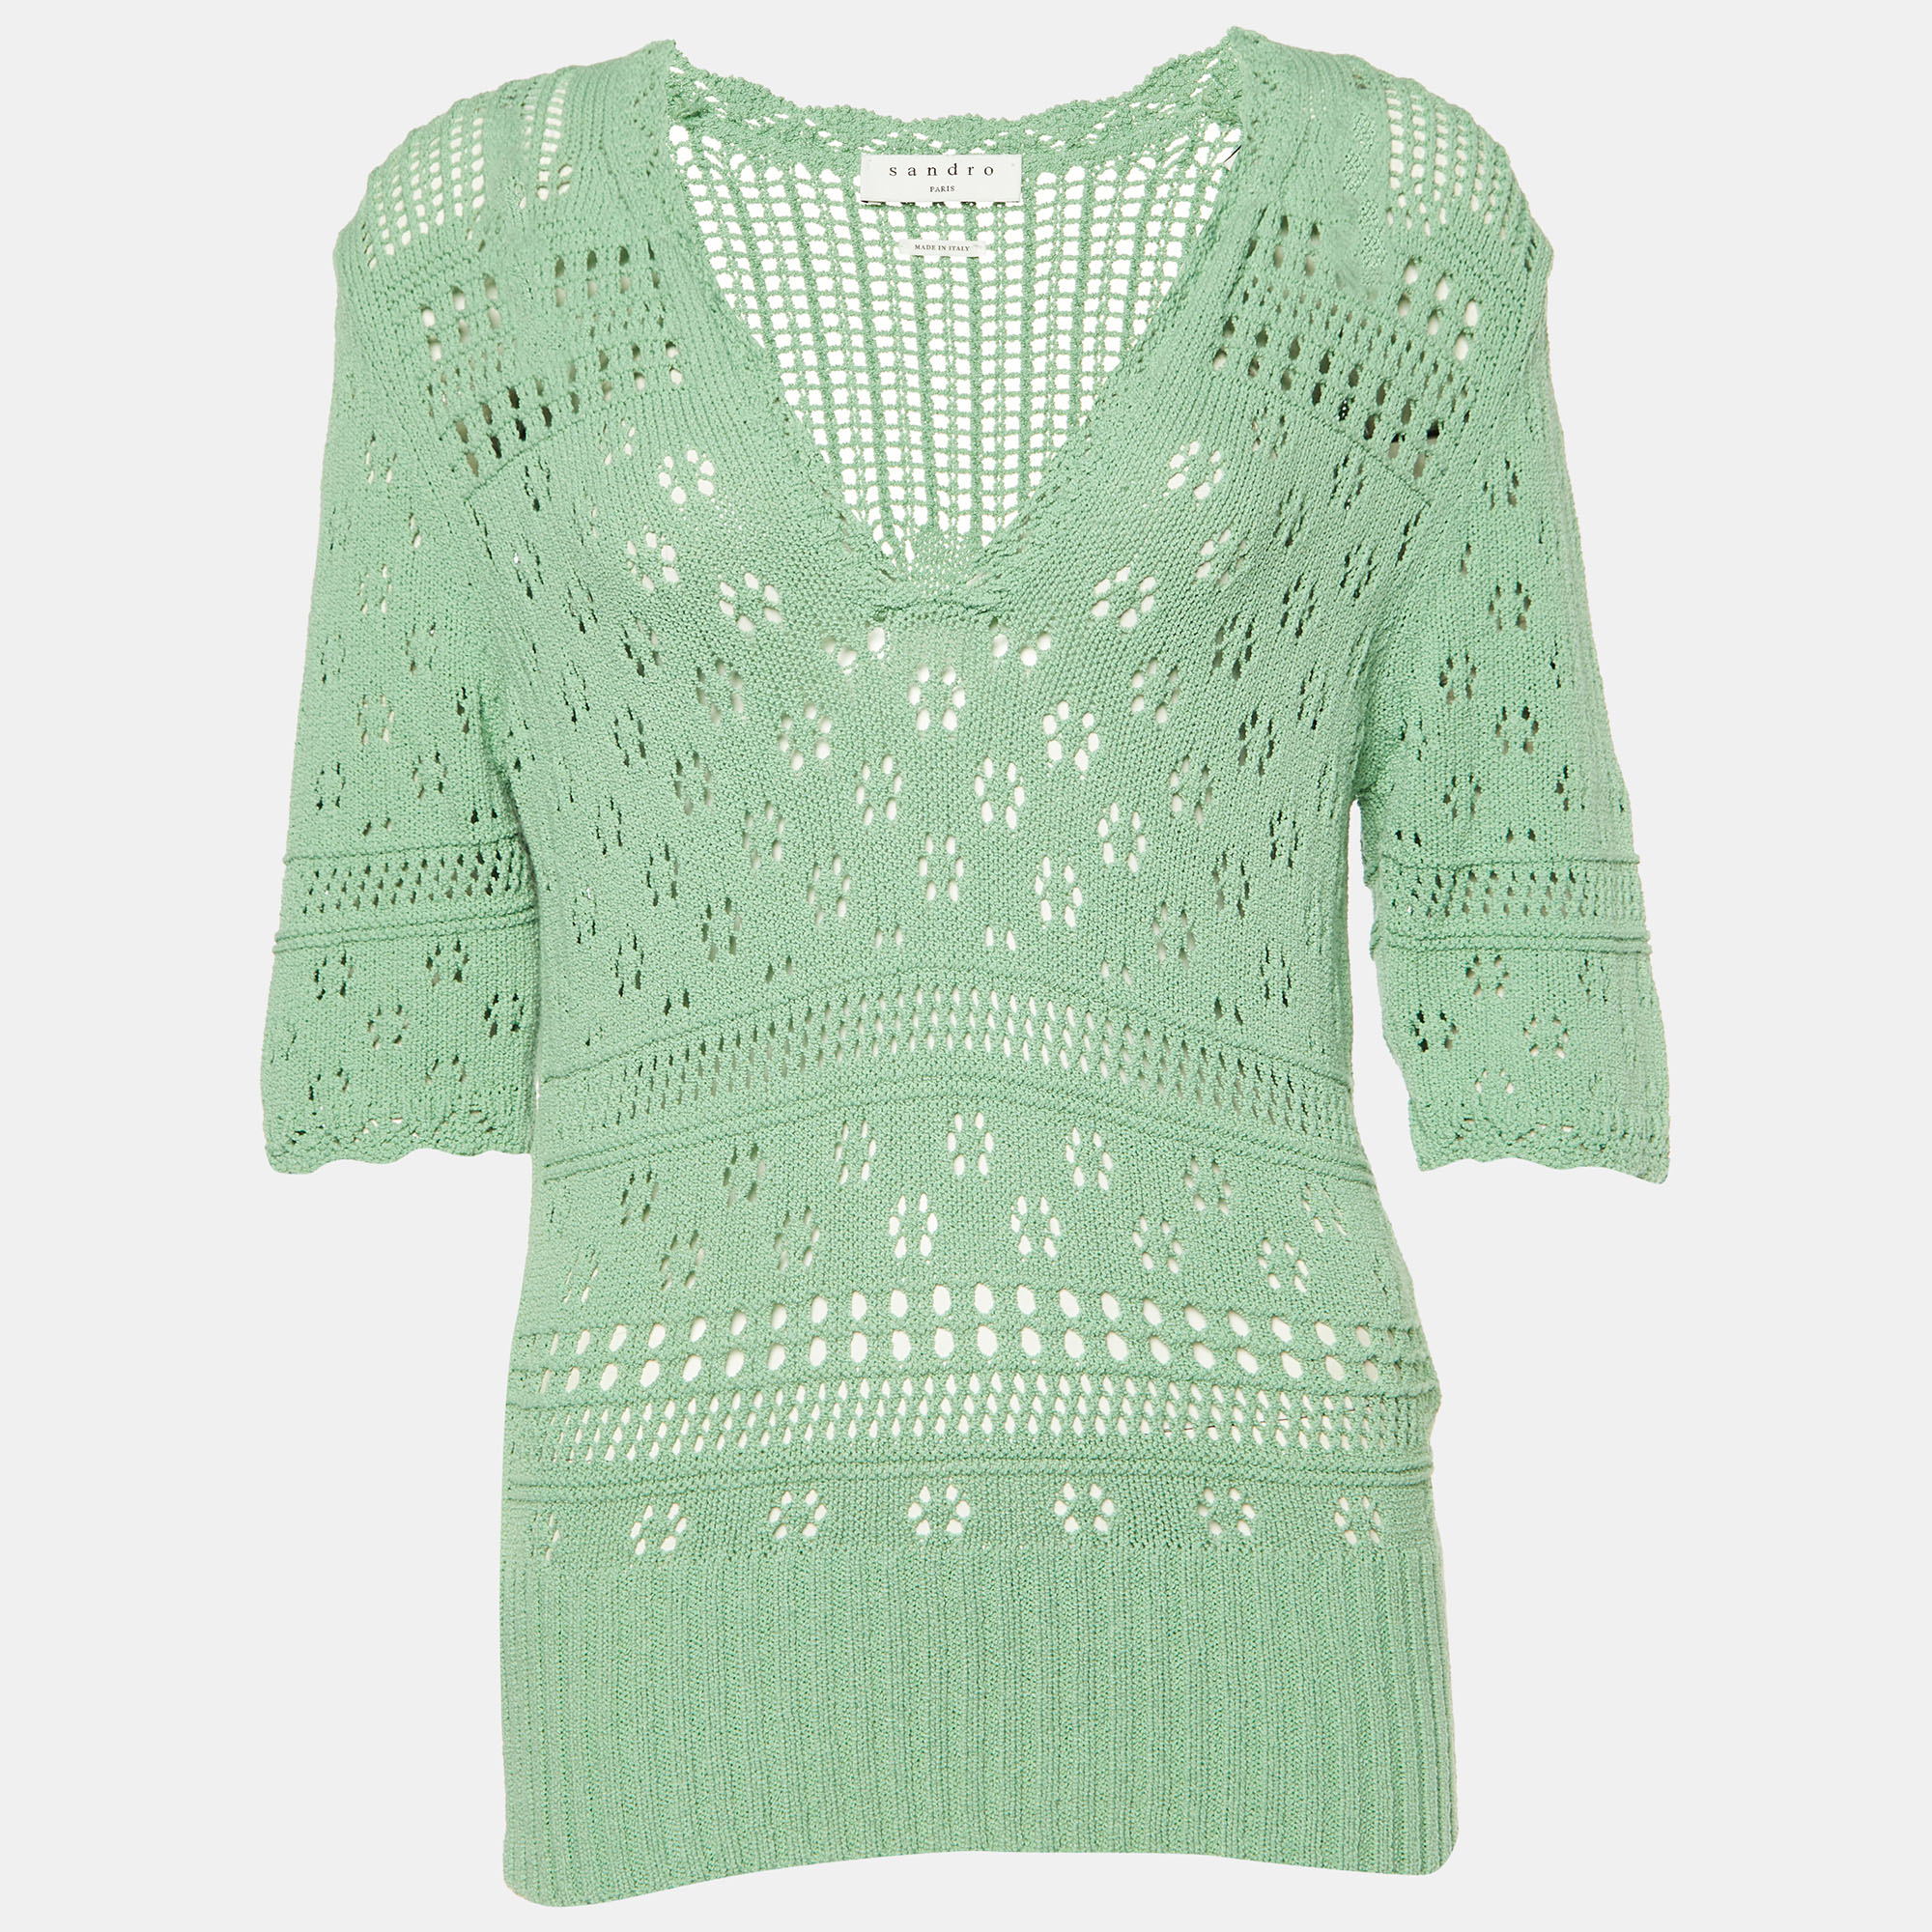 Sandro green crochet knit top m